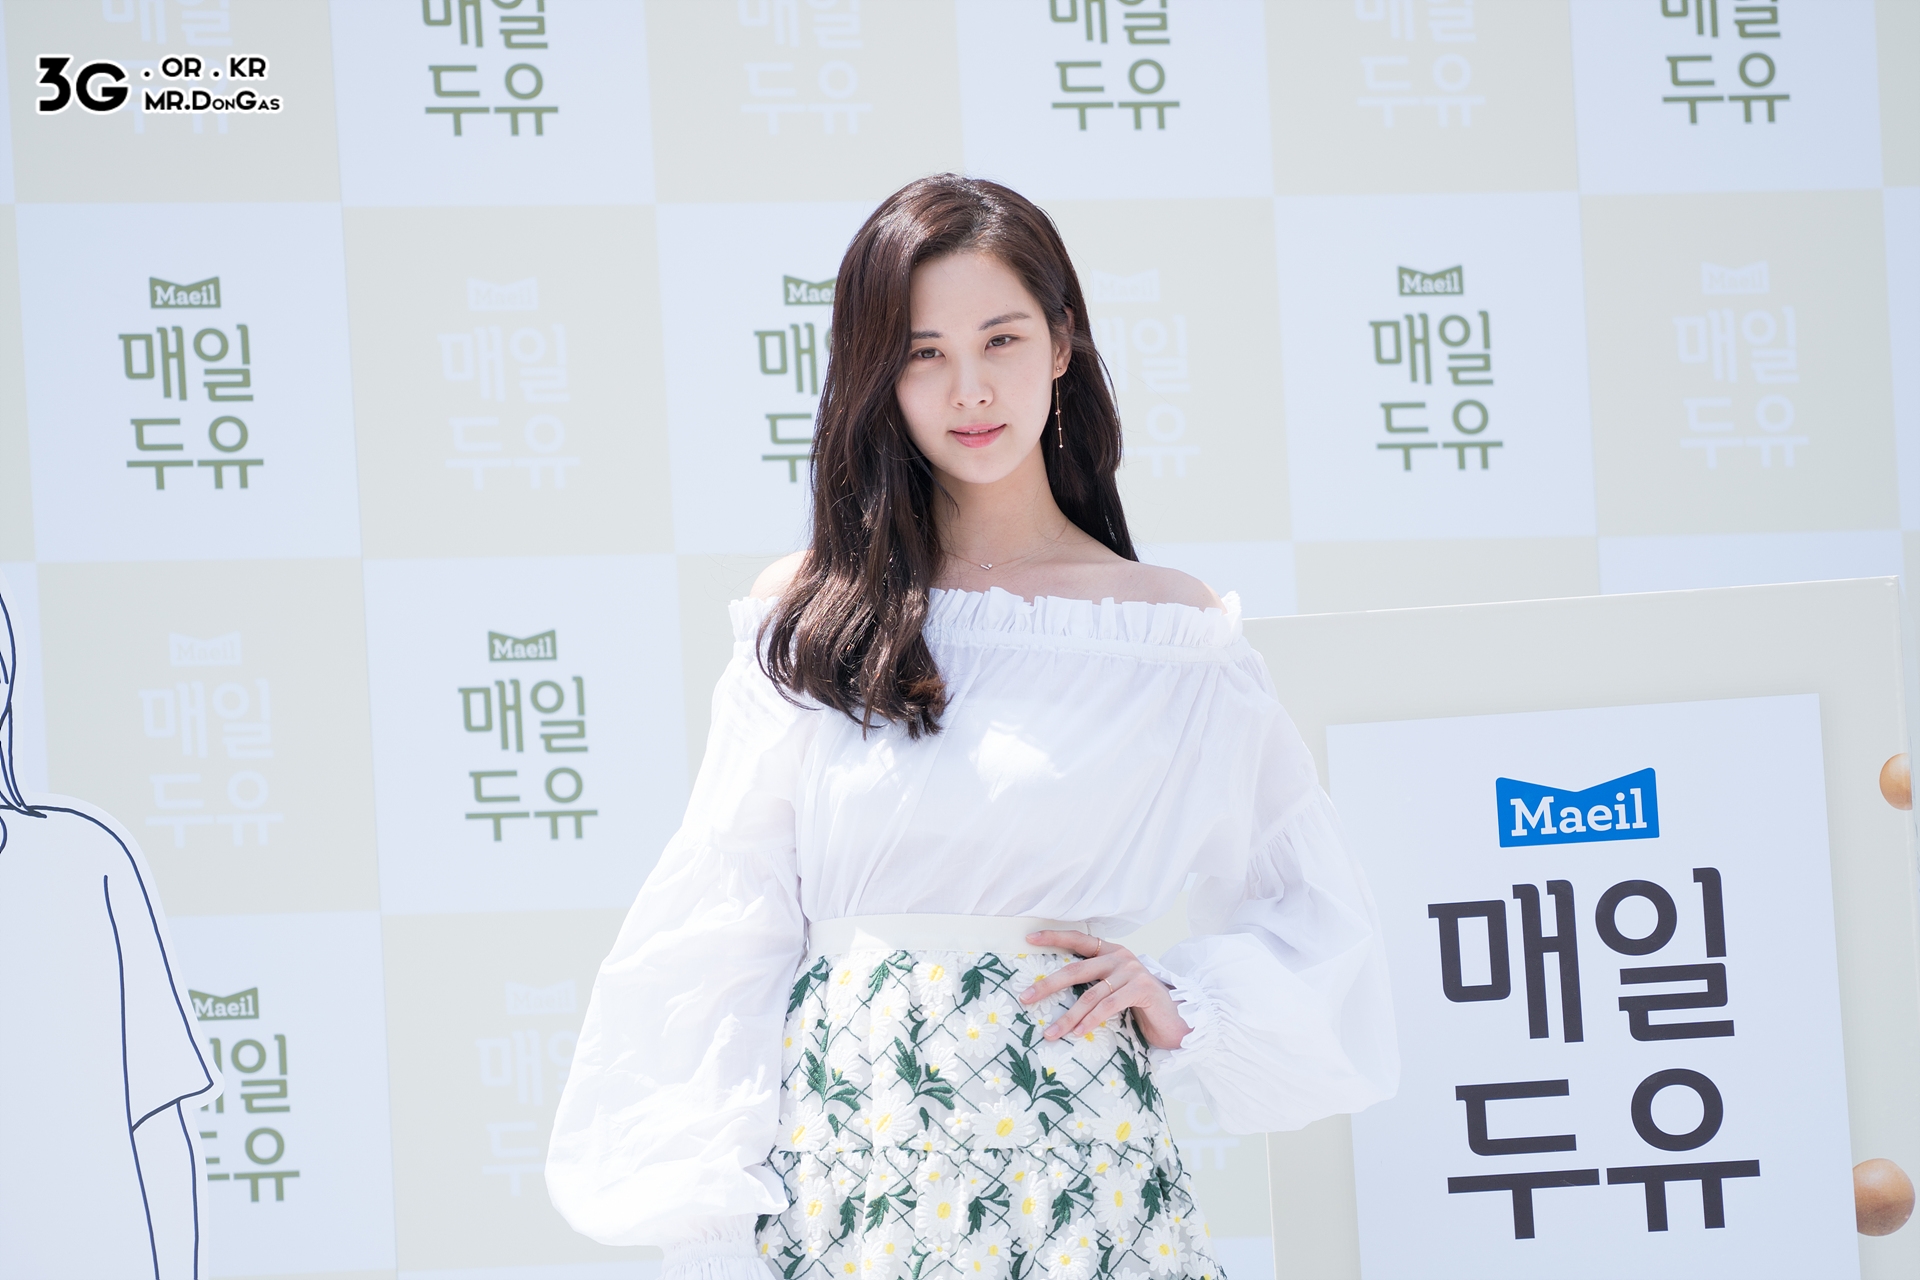  [PIC][03-06-2017]SeoHyun tham dự sự kiện “City Forestival - Maeil Duyou 'Confidence Diary'” vào chiều nay - Page 2 2522AE435933CE212B4FAD